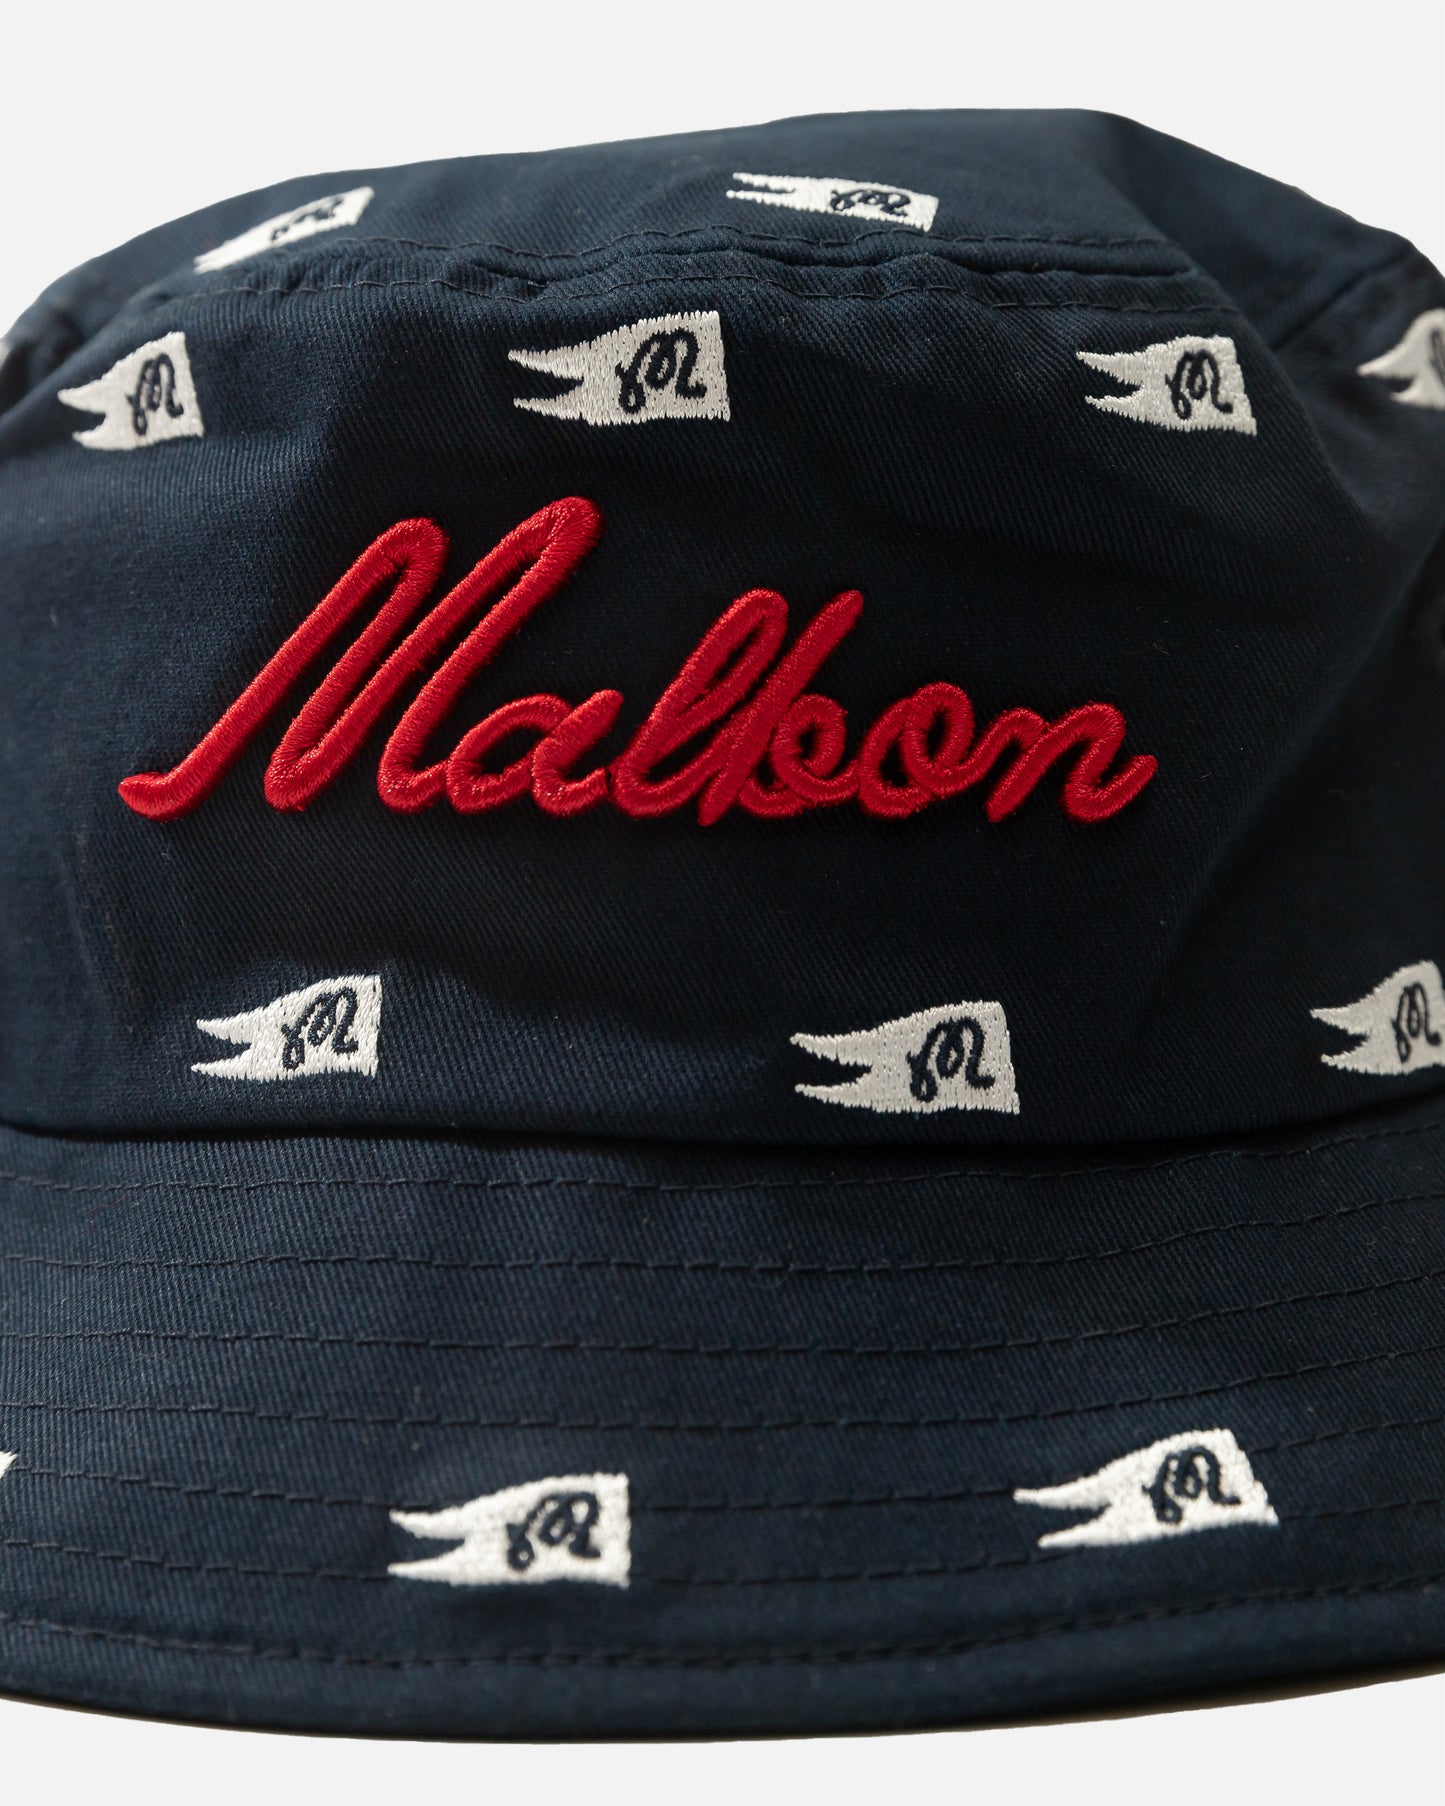 Malbon Winston Flag Bucket Hat Navy